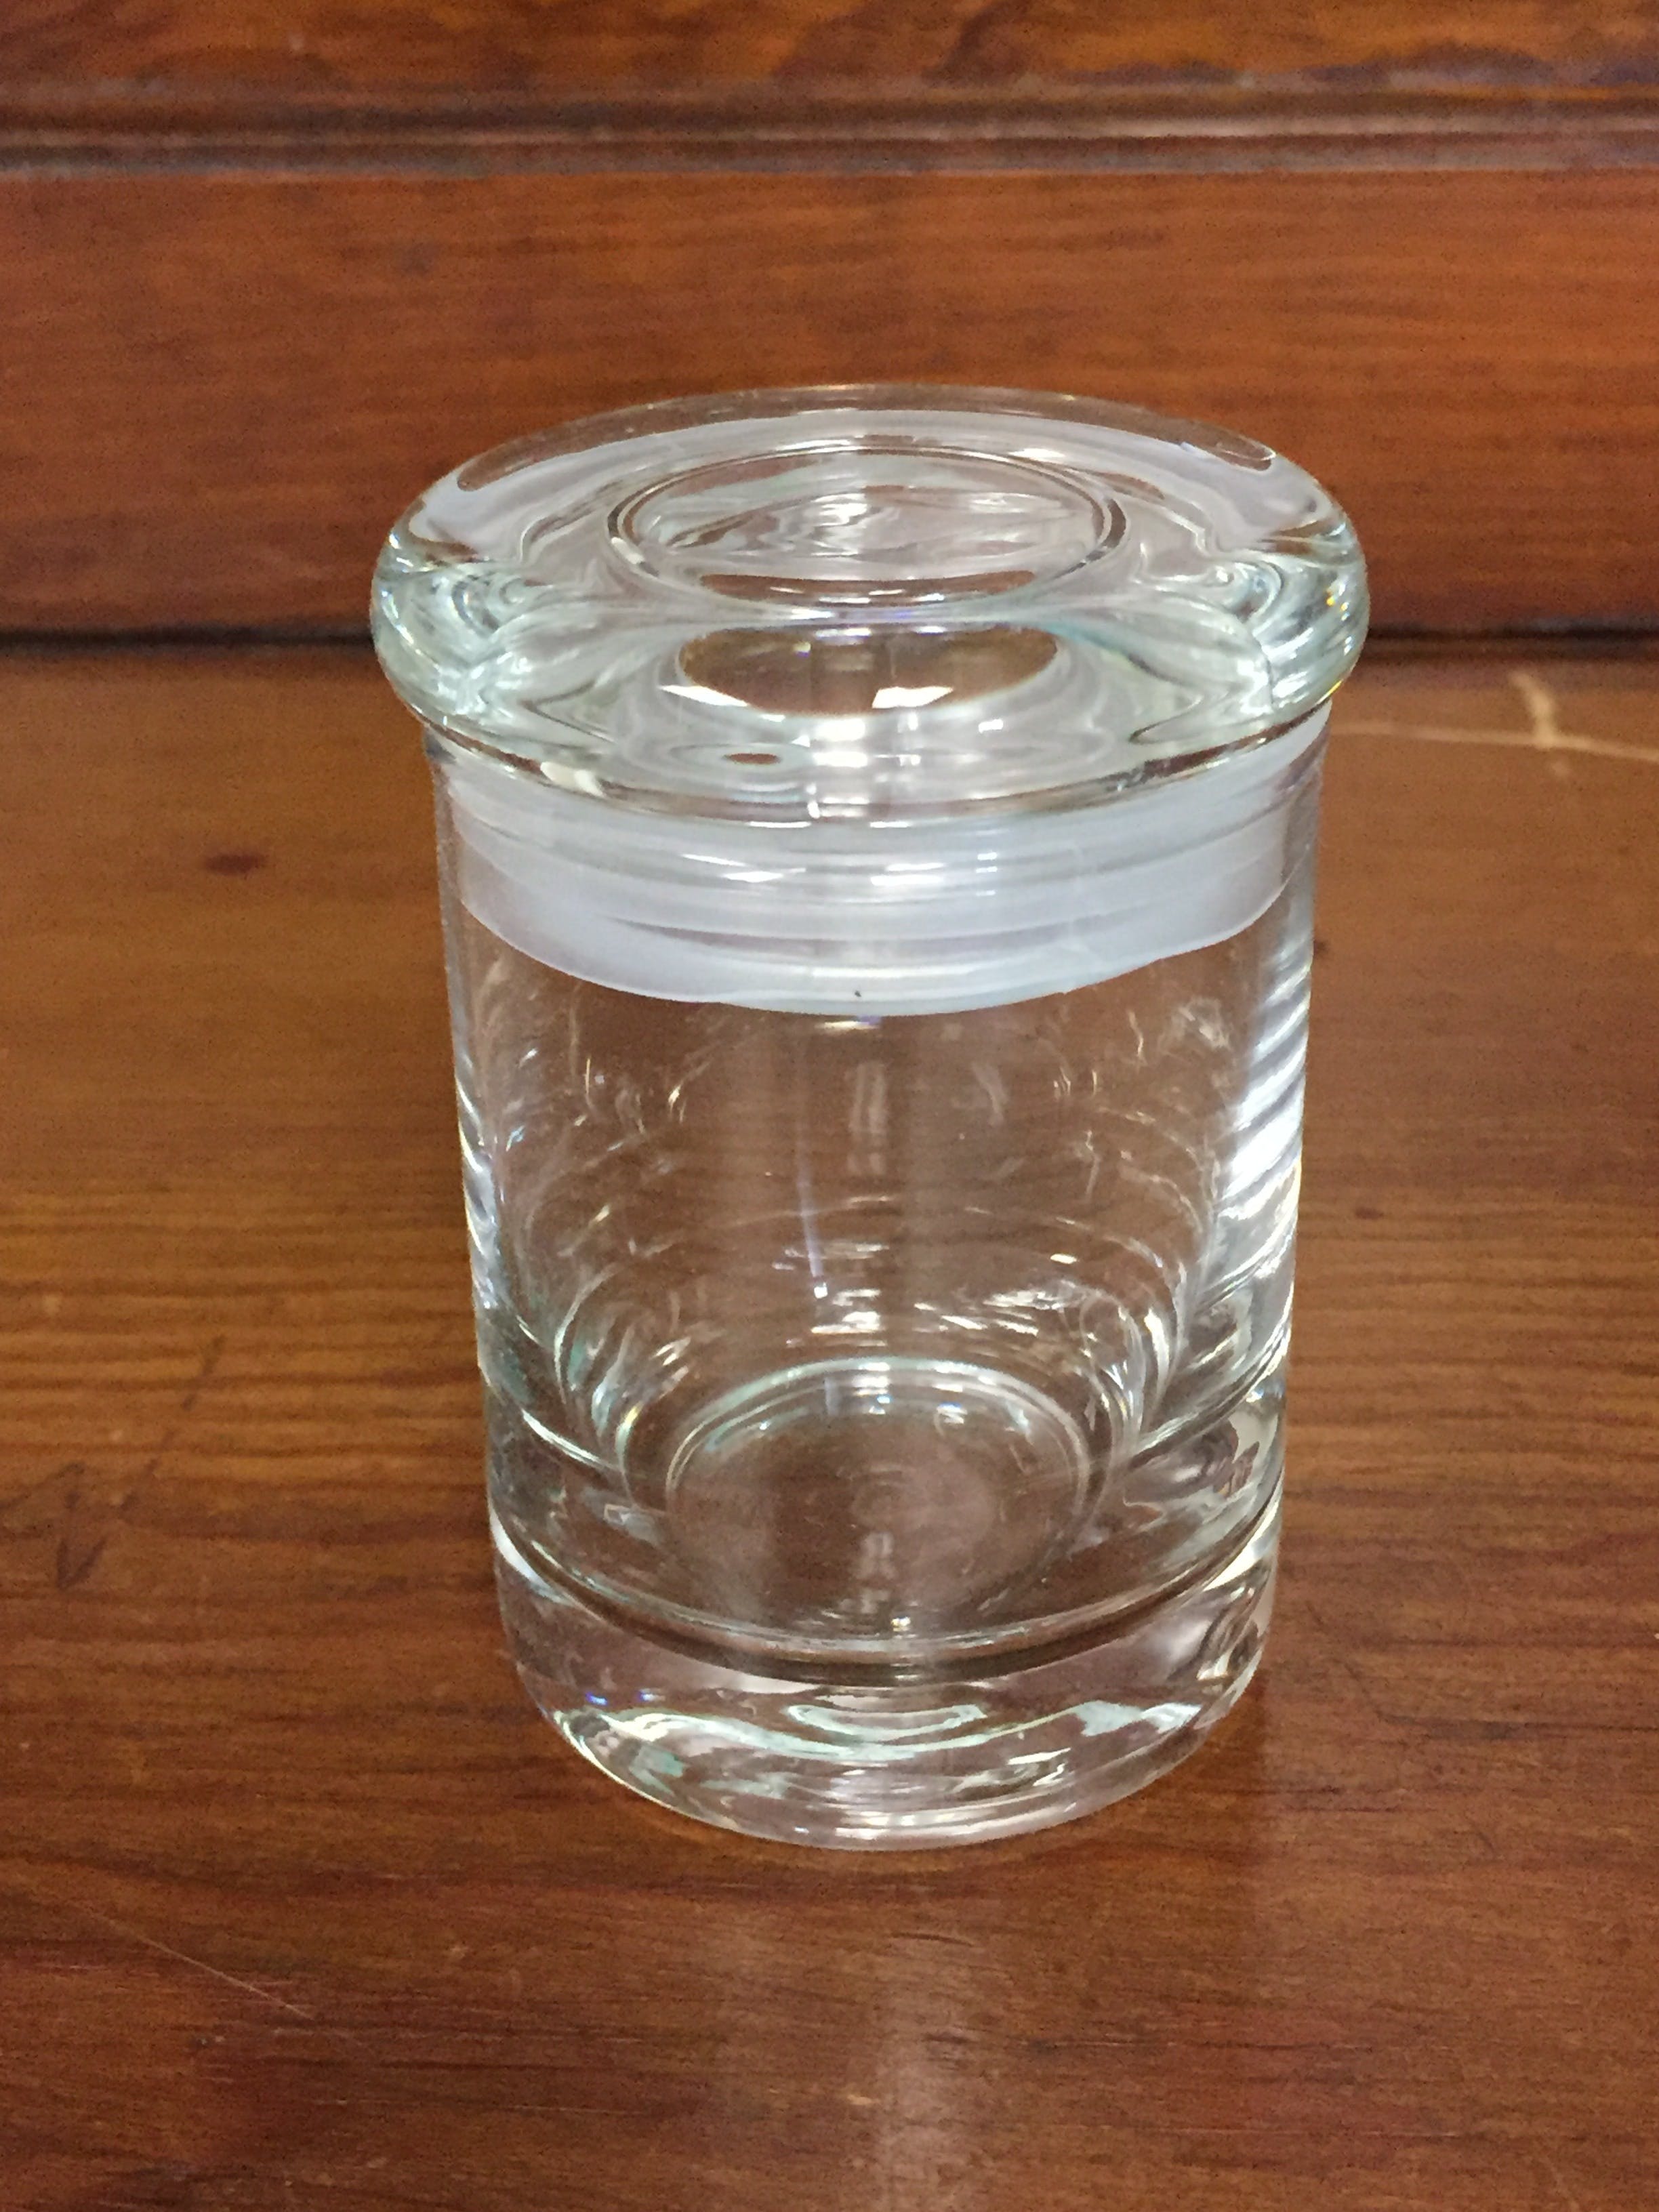 gear-suction-lid-glass-jar